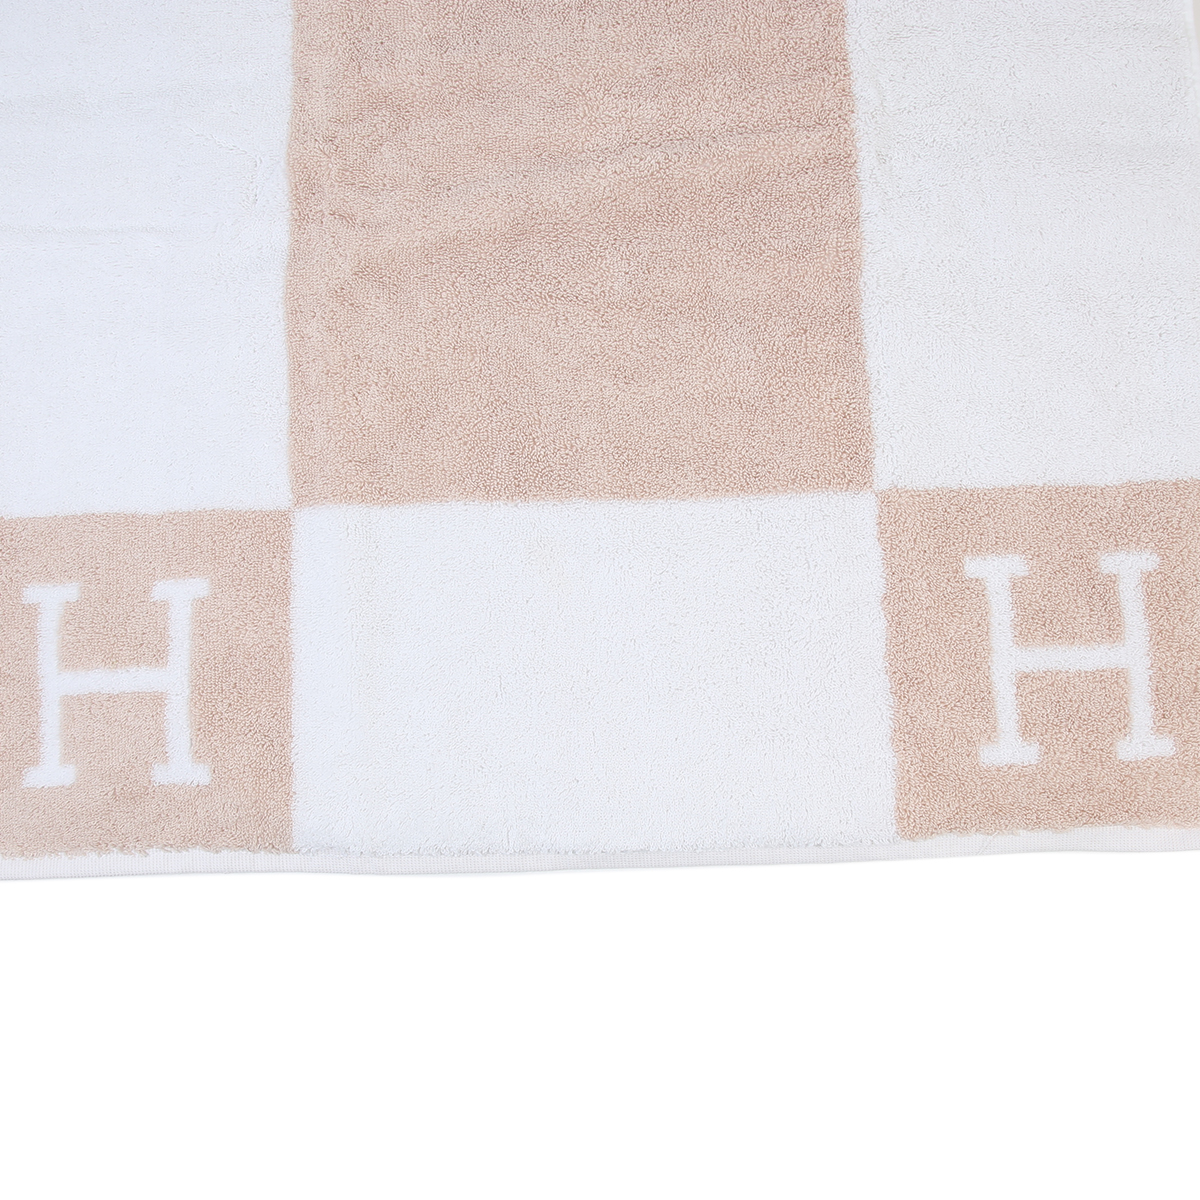  unused Hermes towel white 